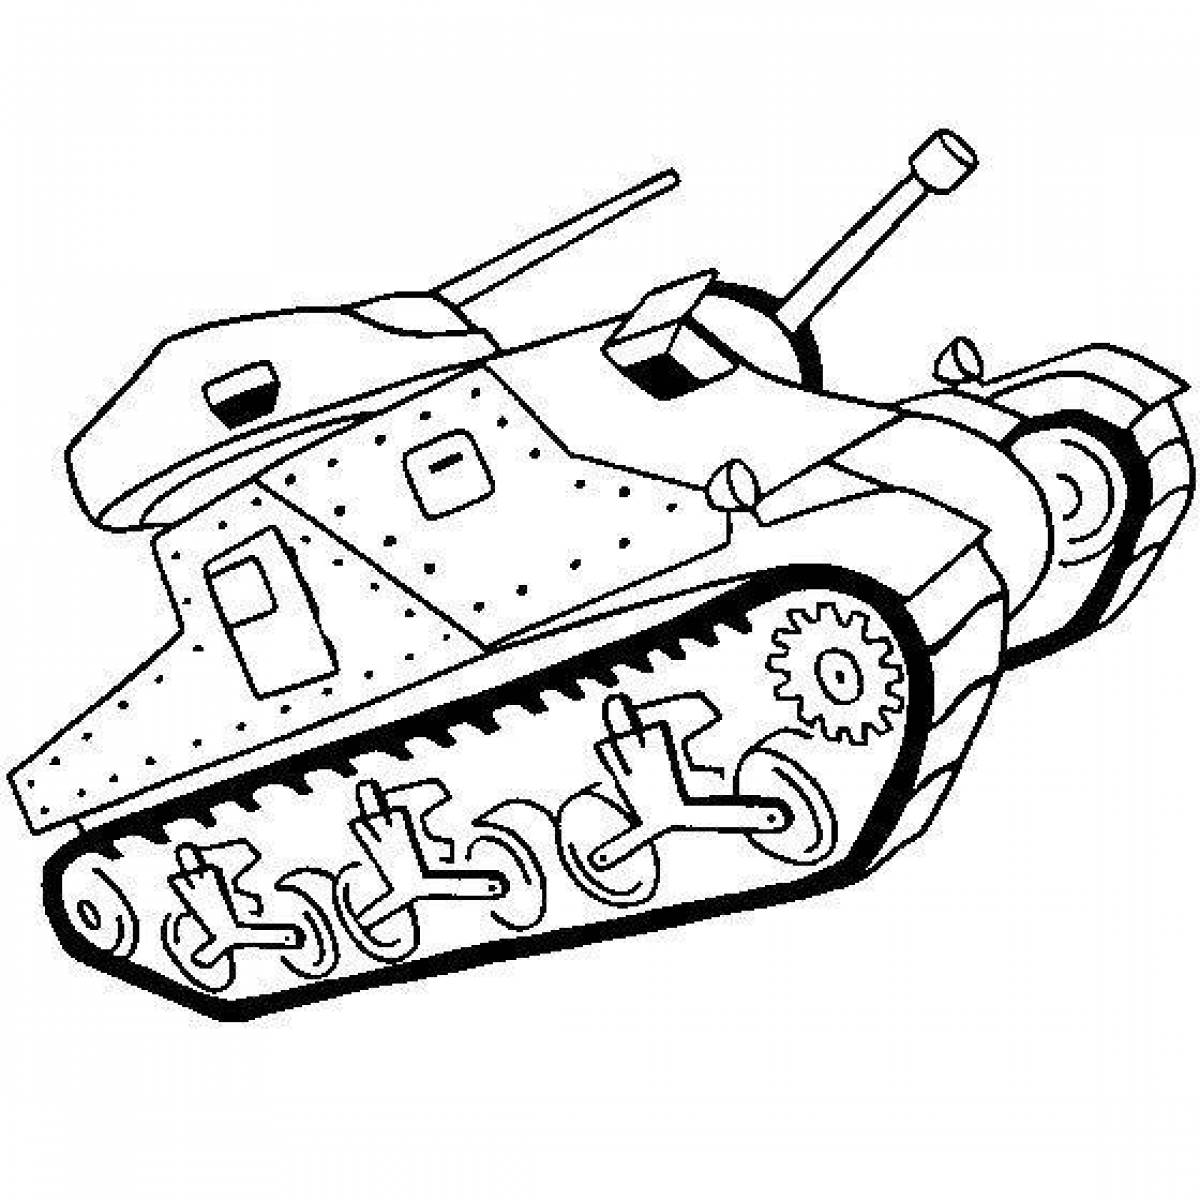 Раскраска танчики. Раскраски танков World of Tanks т34. Танки Геранда кв 44 раскраска. Танк Левиафан раскраска. Танк картинка раскраска.